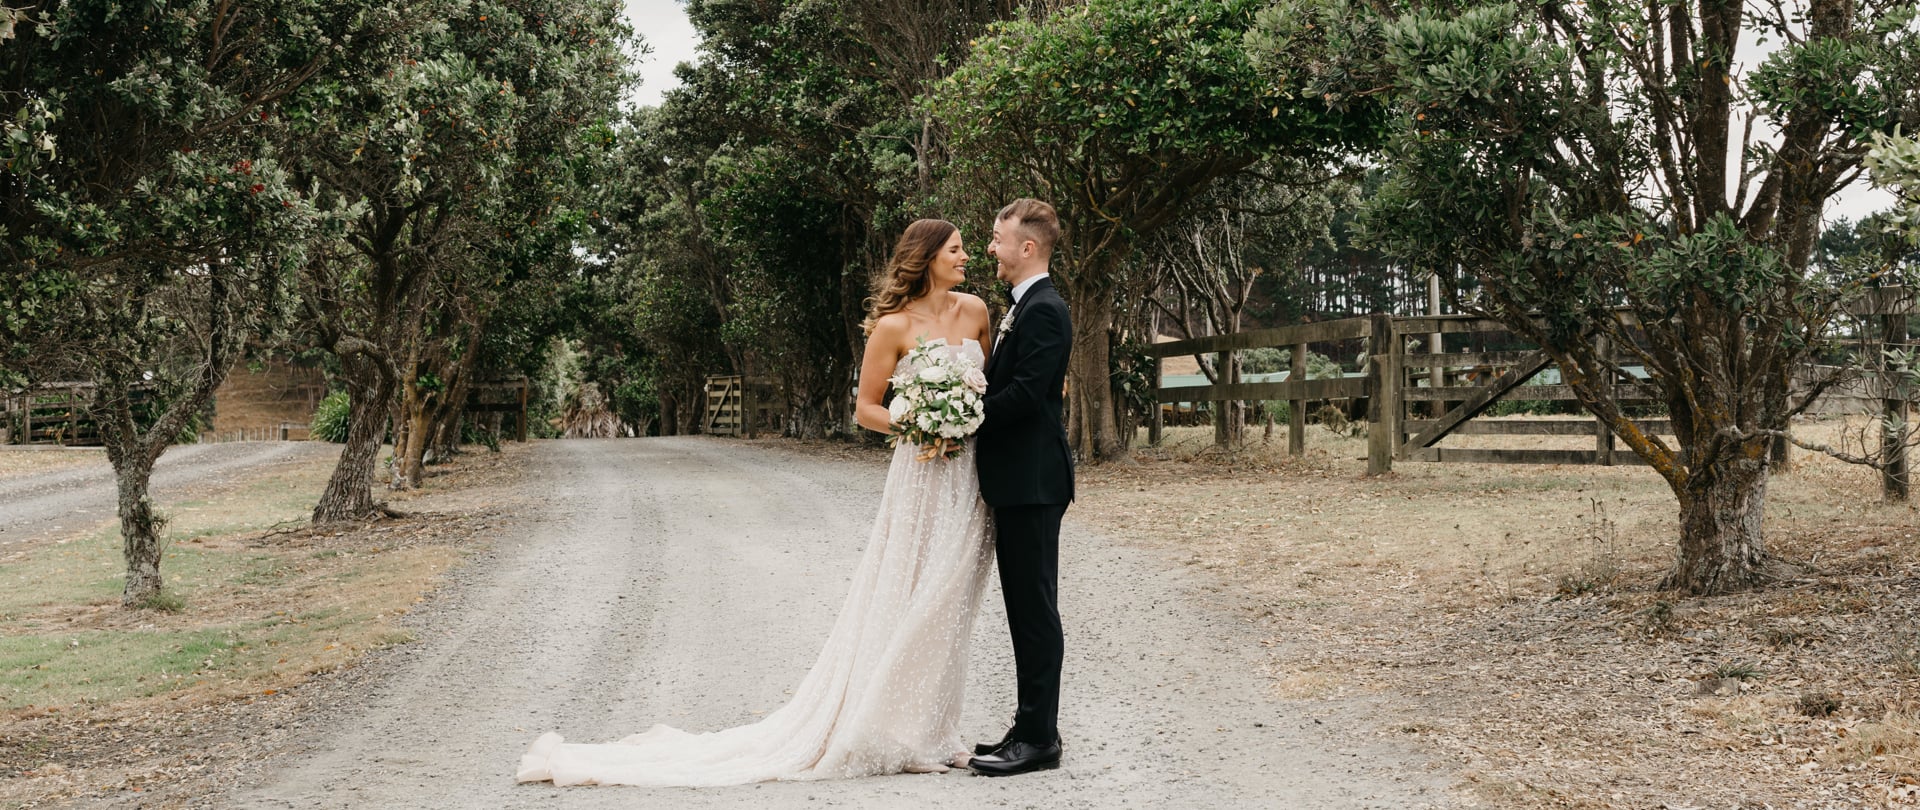 Holly & Daniel Wedding Video Filmed atAuckland,New Zealand